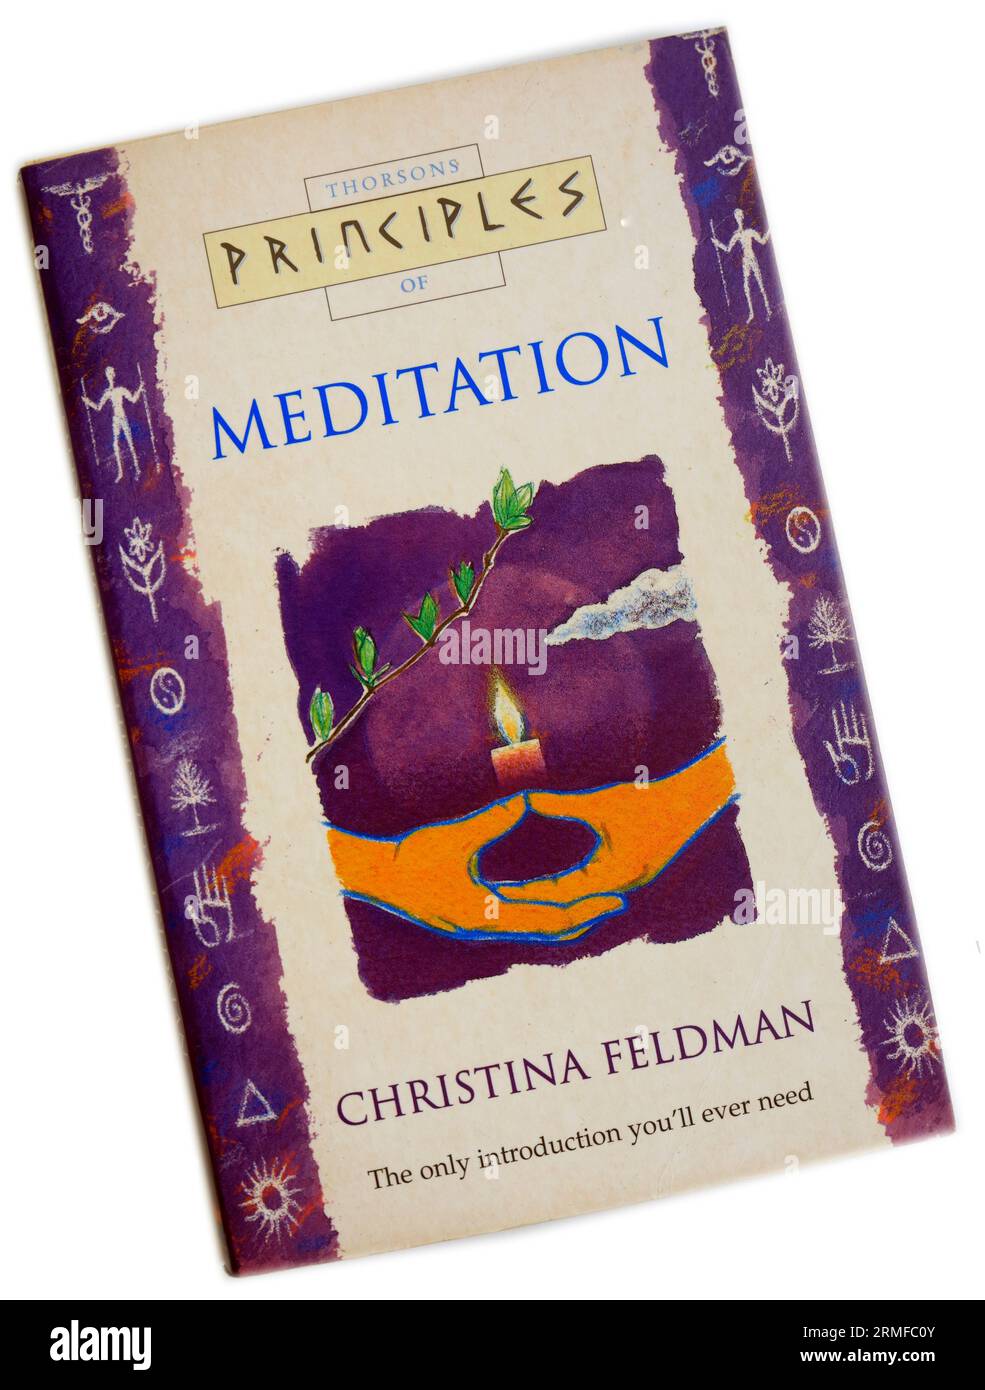 Thorson's Principles of Meditation, paperback Book cover on white background by Christina Feldman. Stock Photo